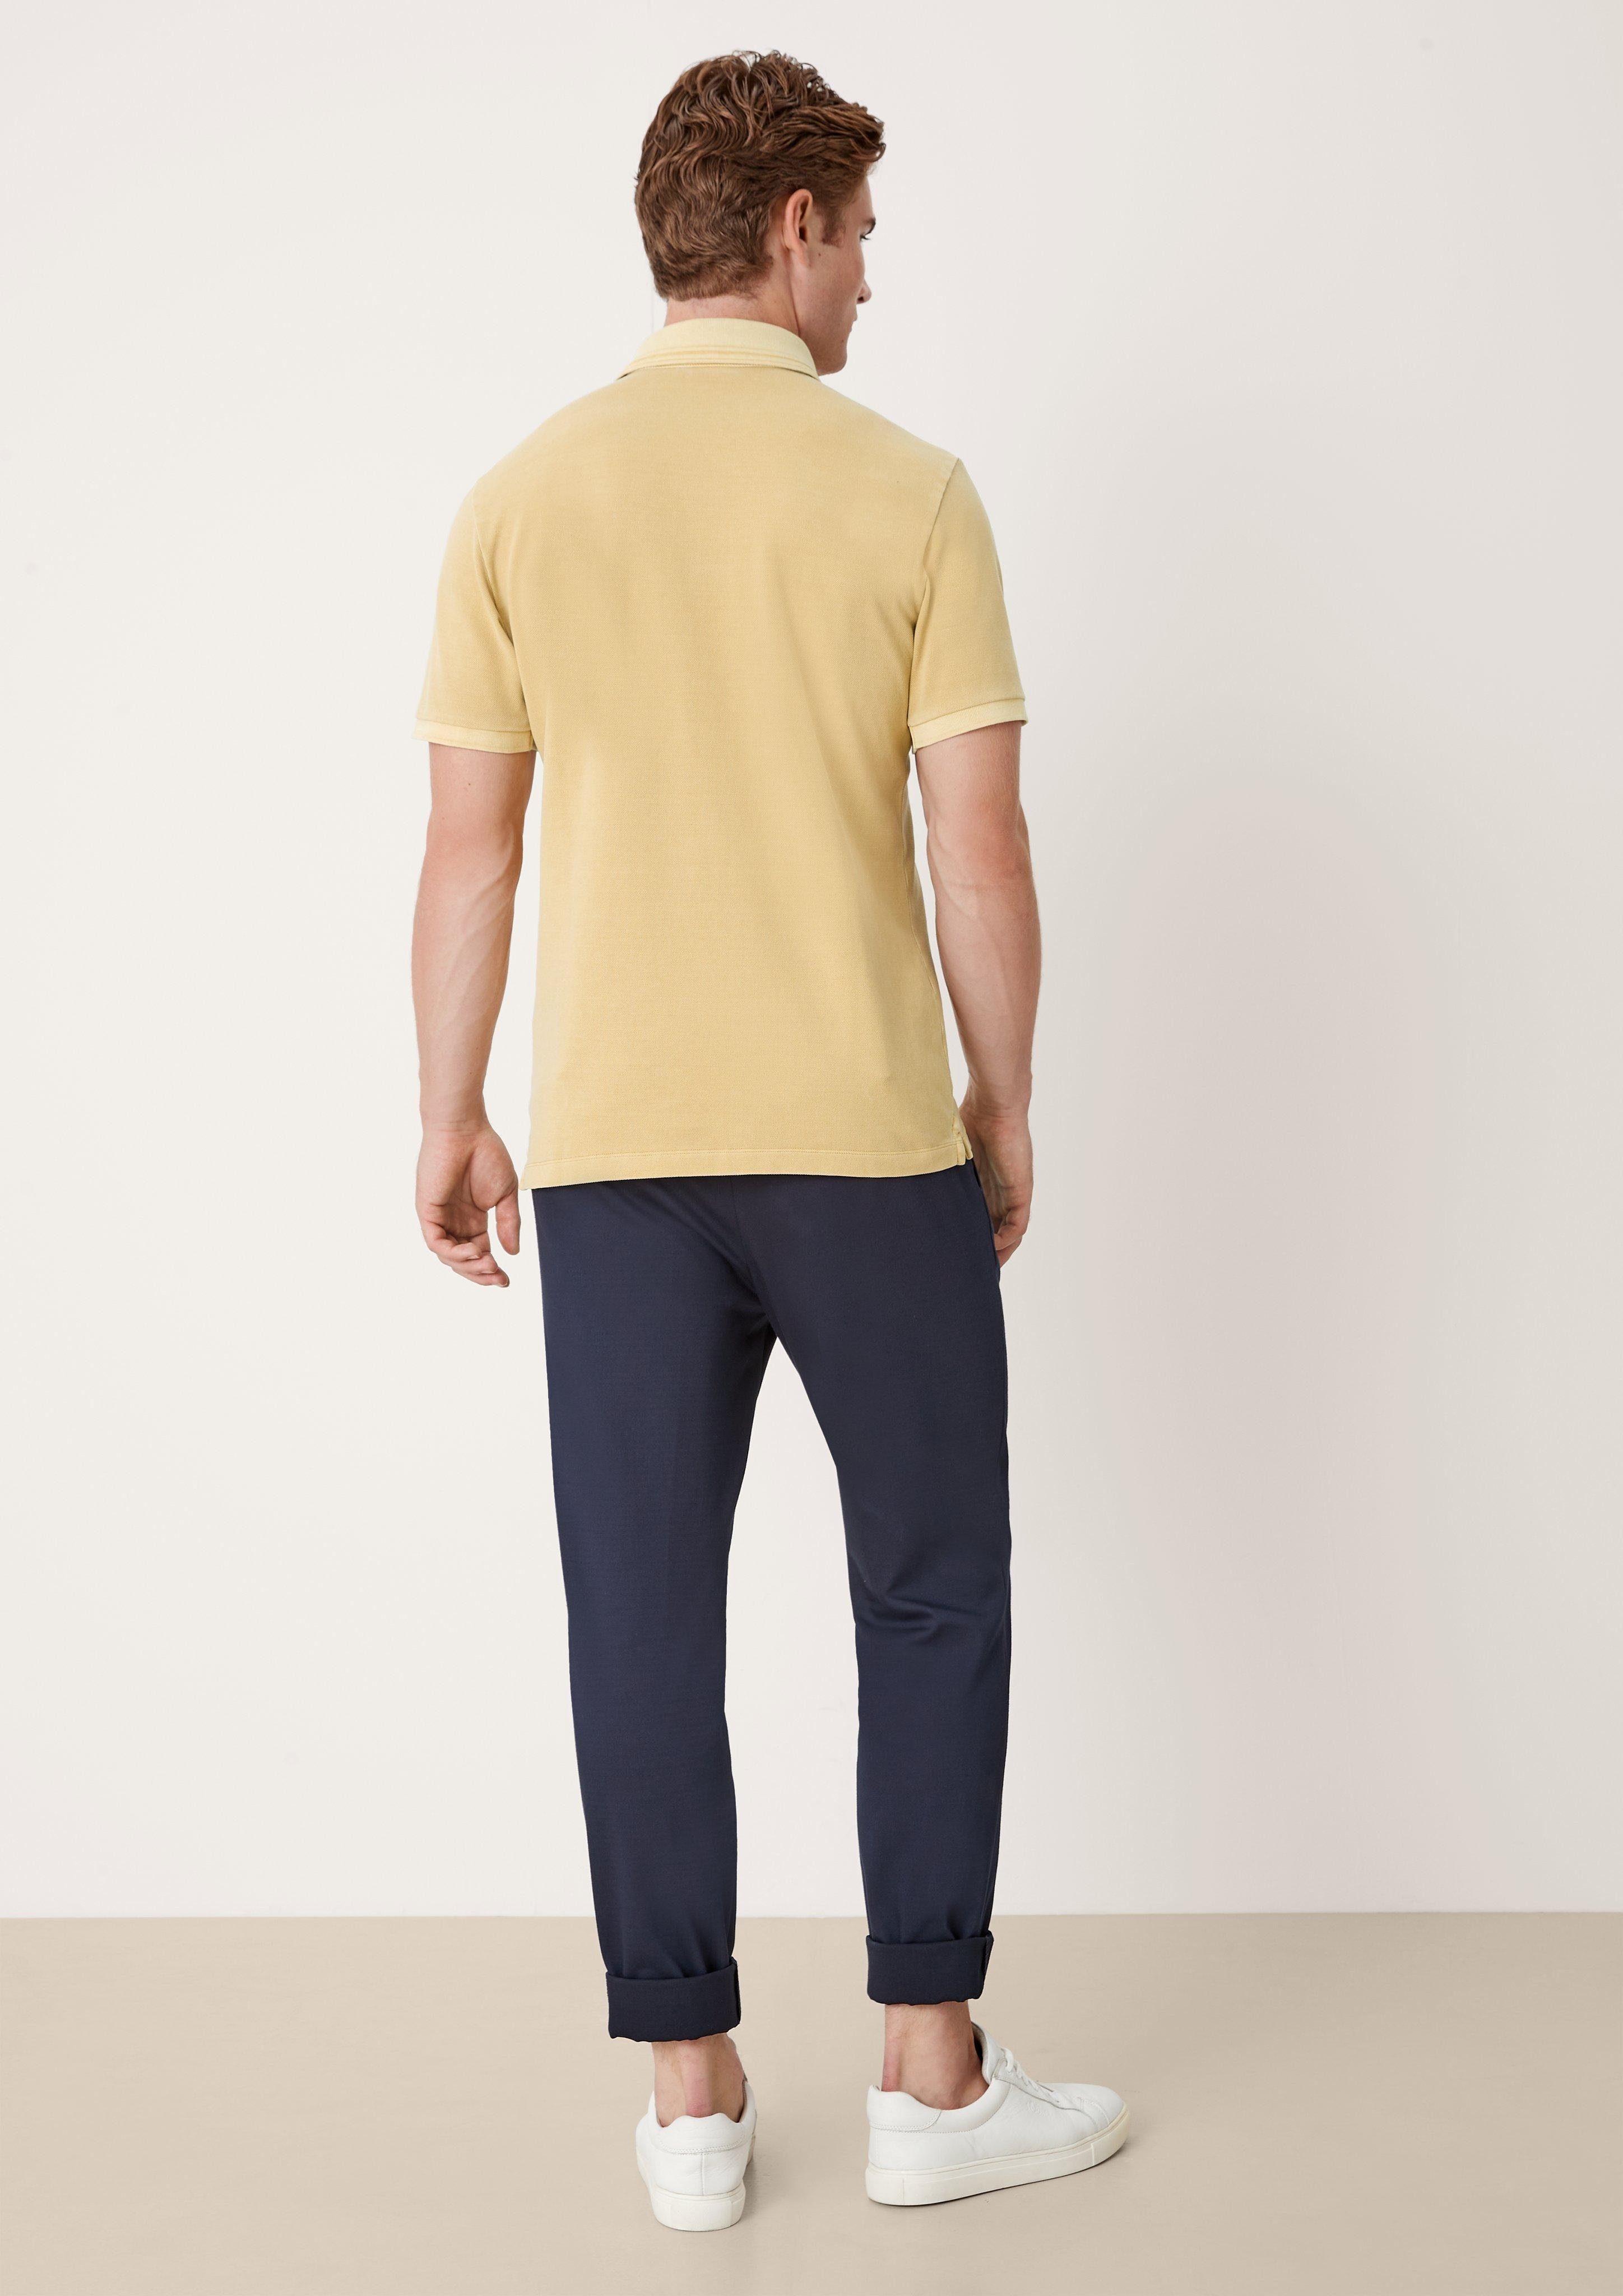 s.Oliver Waschung, Poloshirt yellow mit Kurzarmshirt Label-Patch Wascheffekt